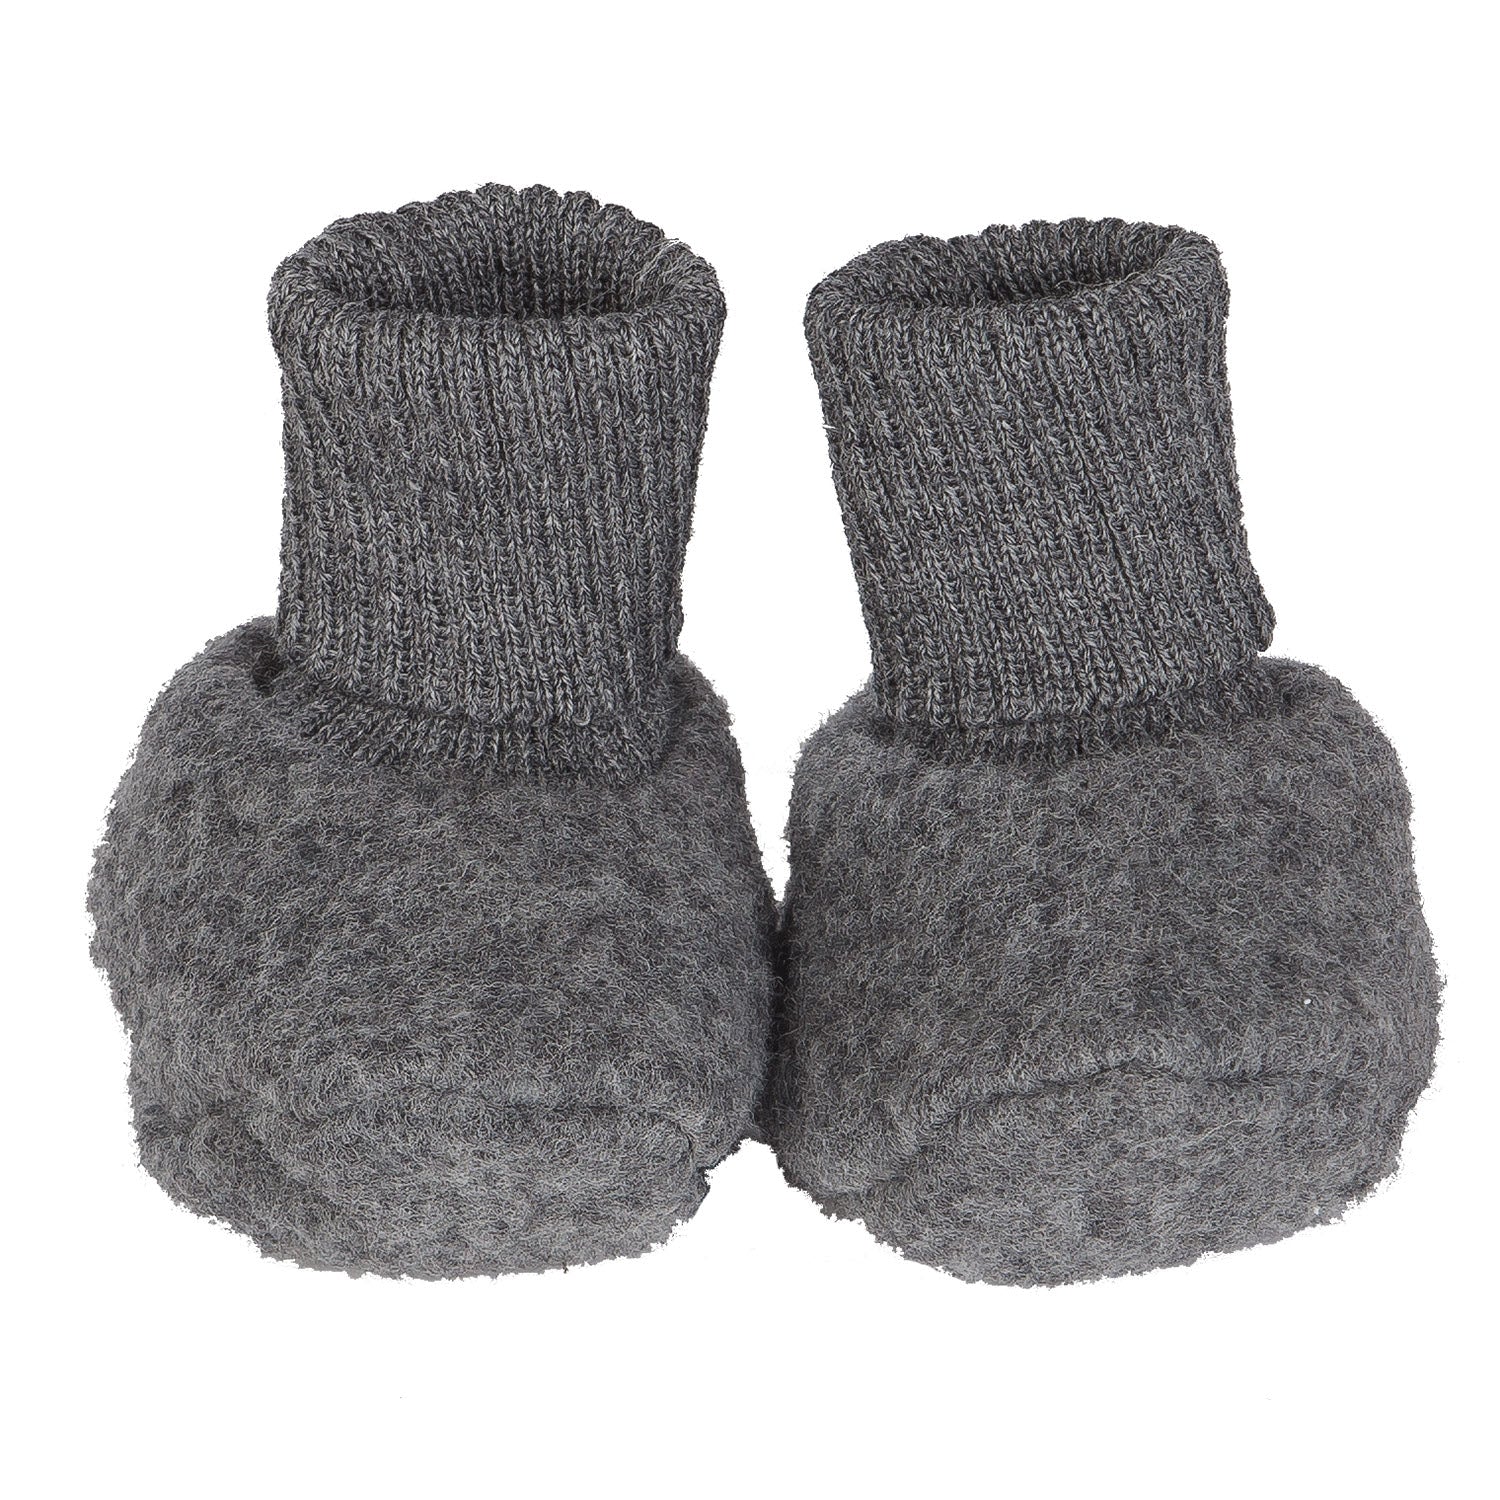 Wool fleece booties